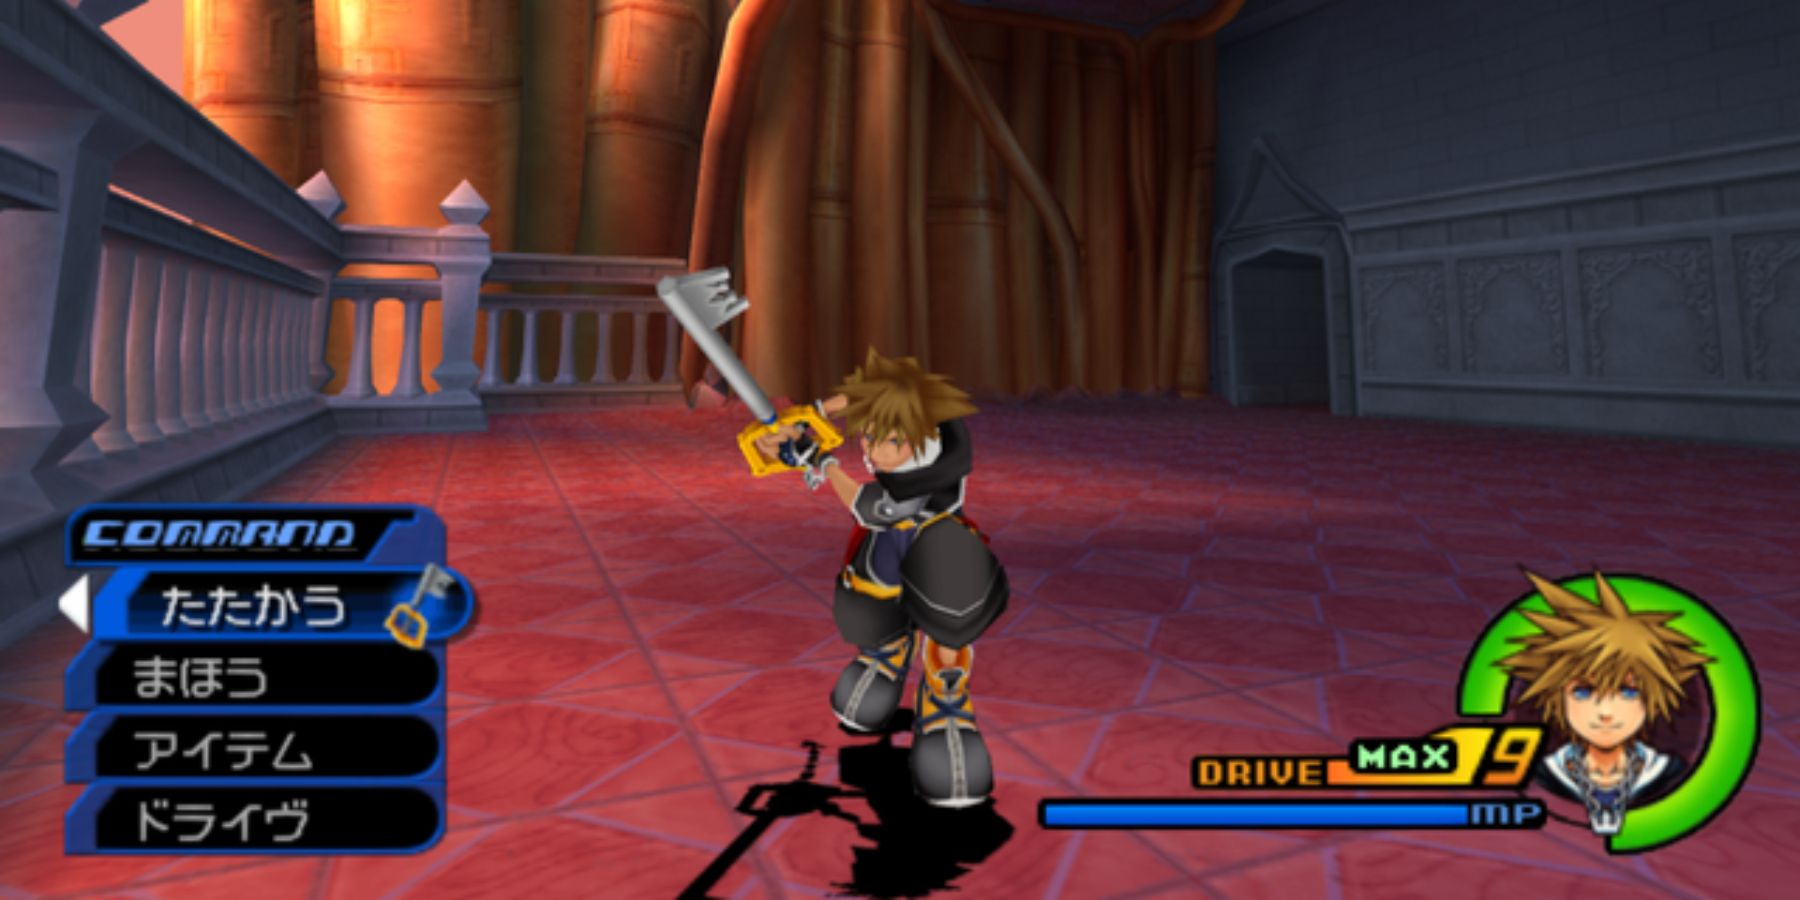 Sora exploring Hollow Bastion in Kingdom Hearts 2